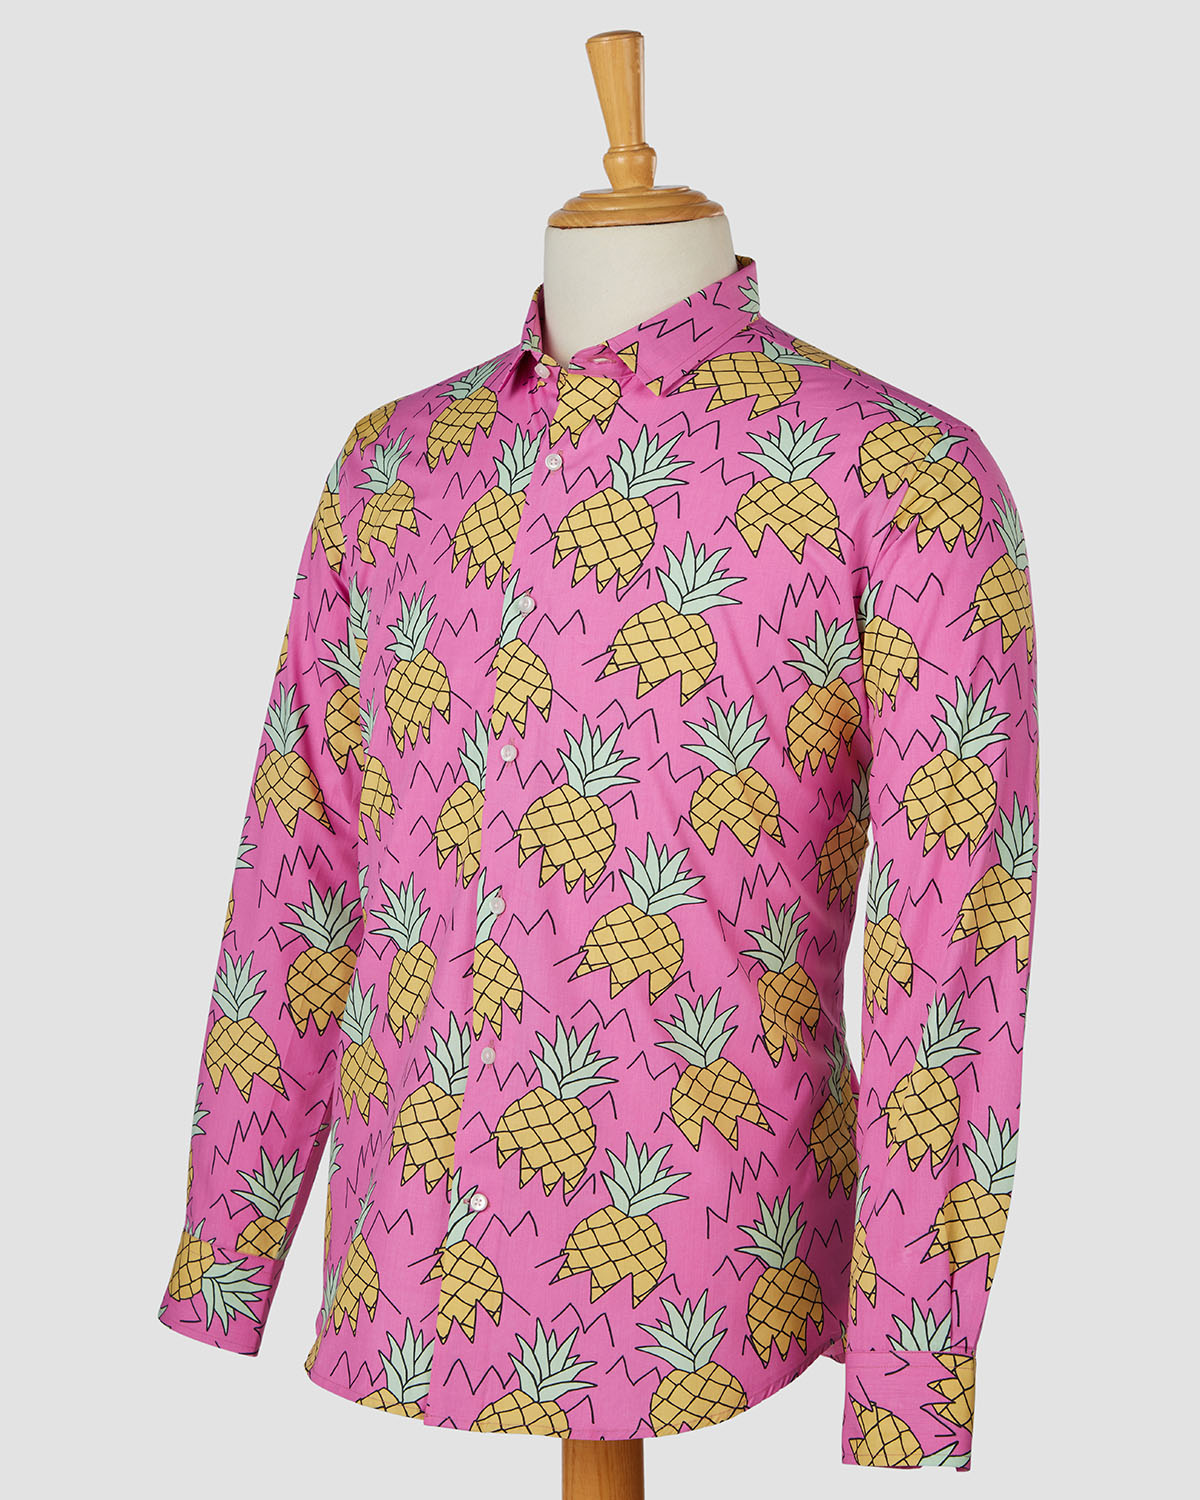 Bombay Shirt Company - Pineapple Sorbet Shirt